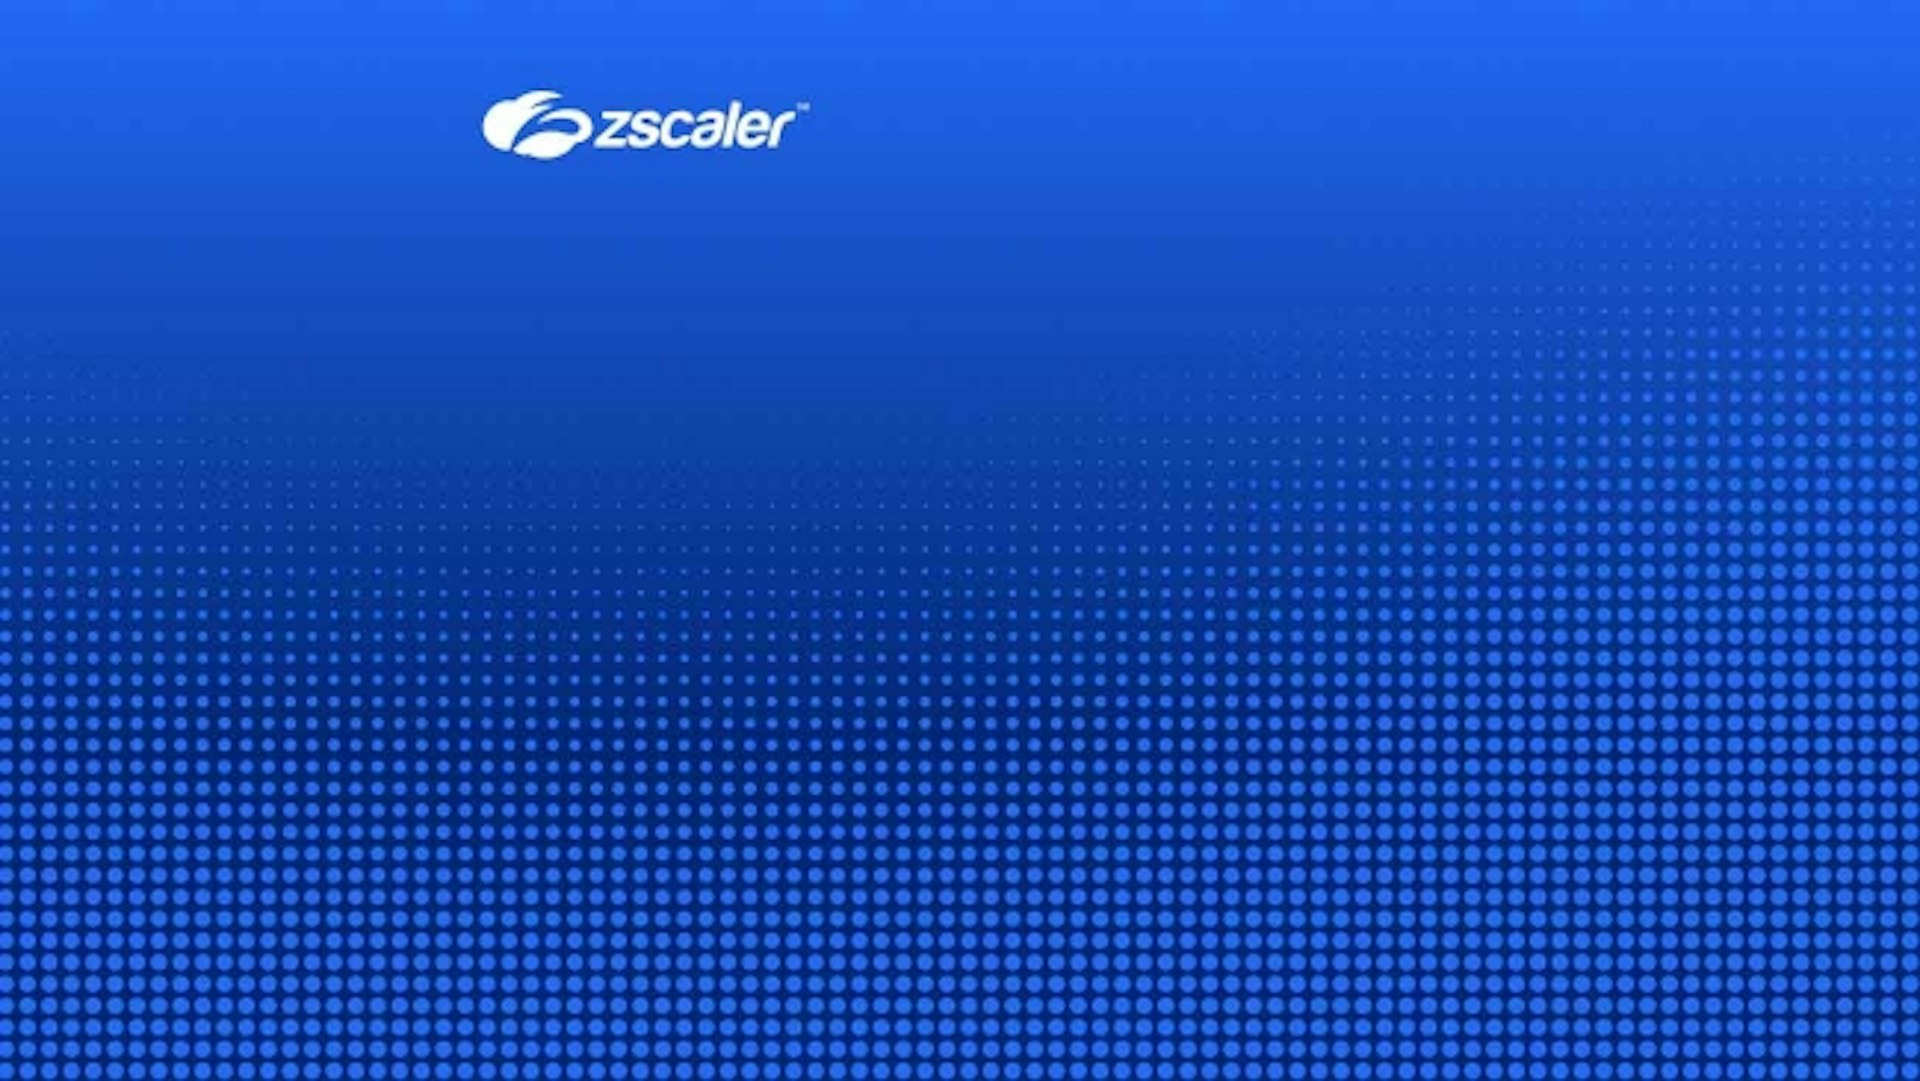 Zscaler Cloud Security Posture Management